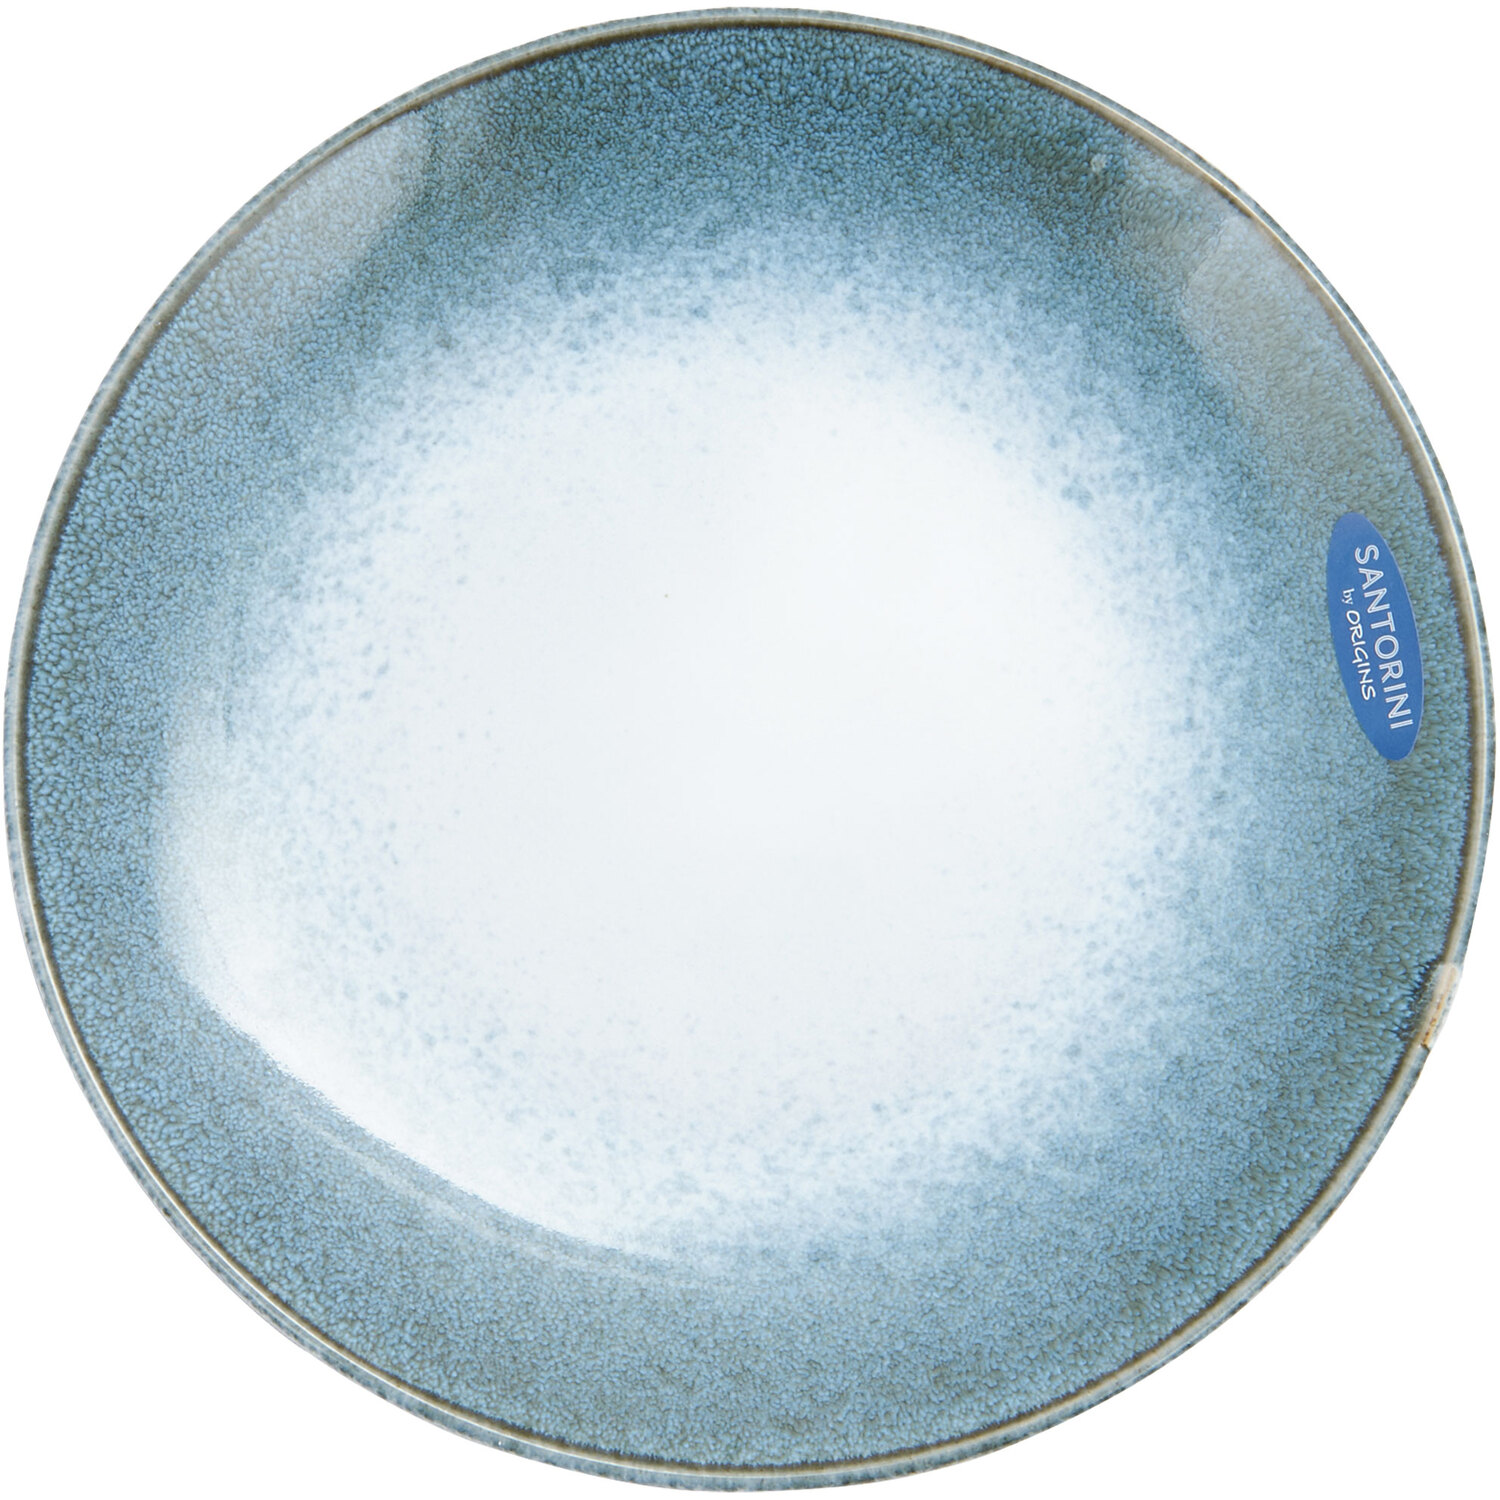 Santorini Reactive Glaze Plate - Blue Image 1